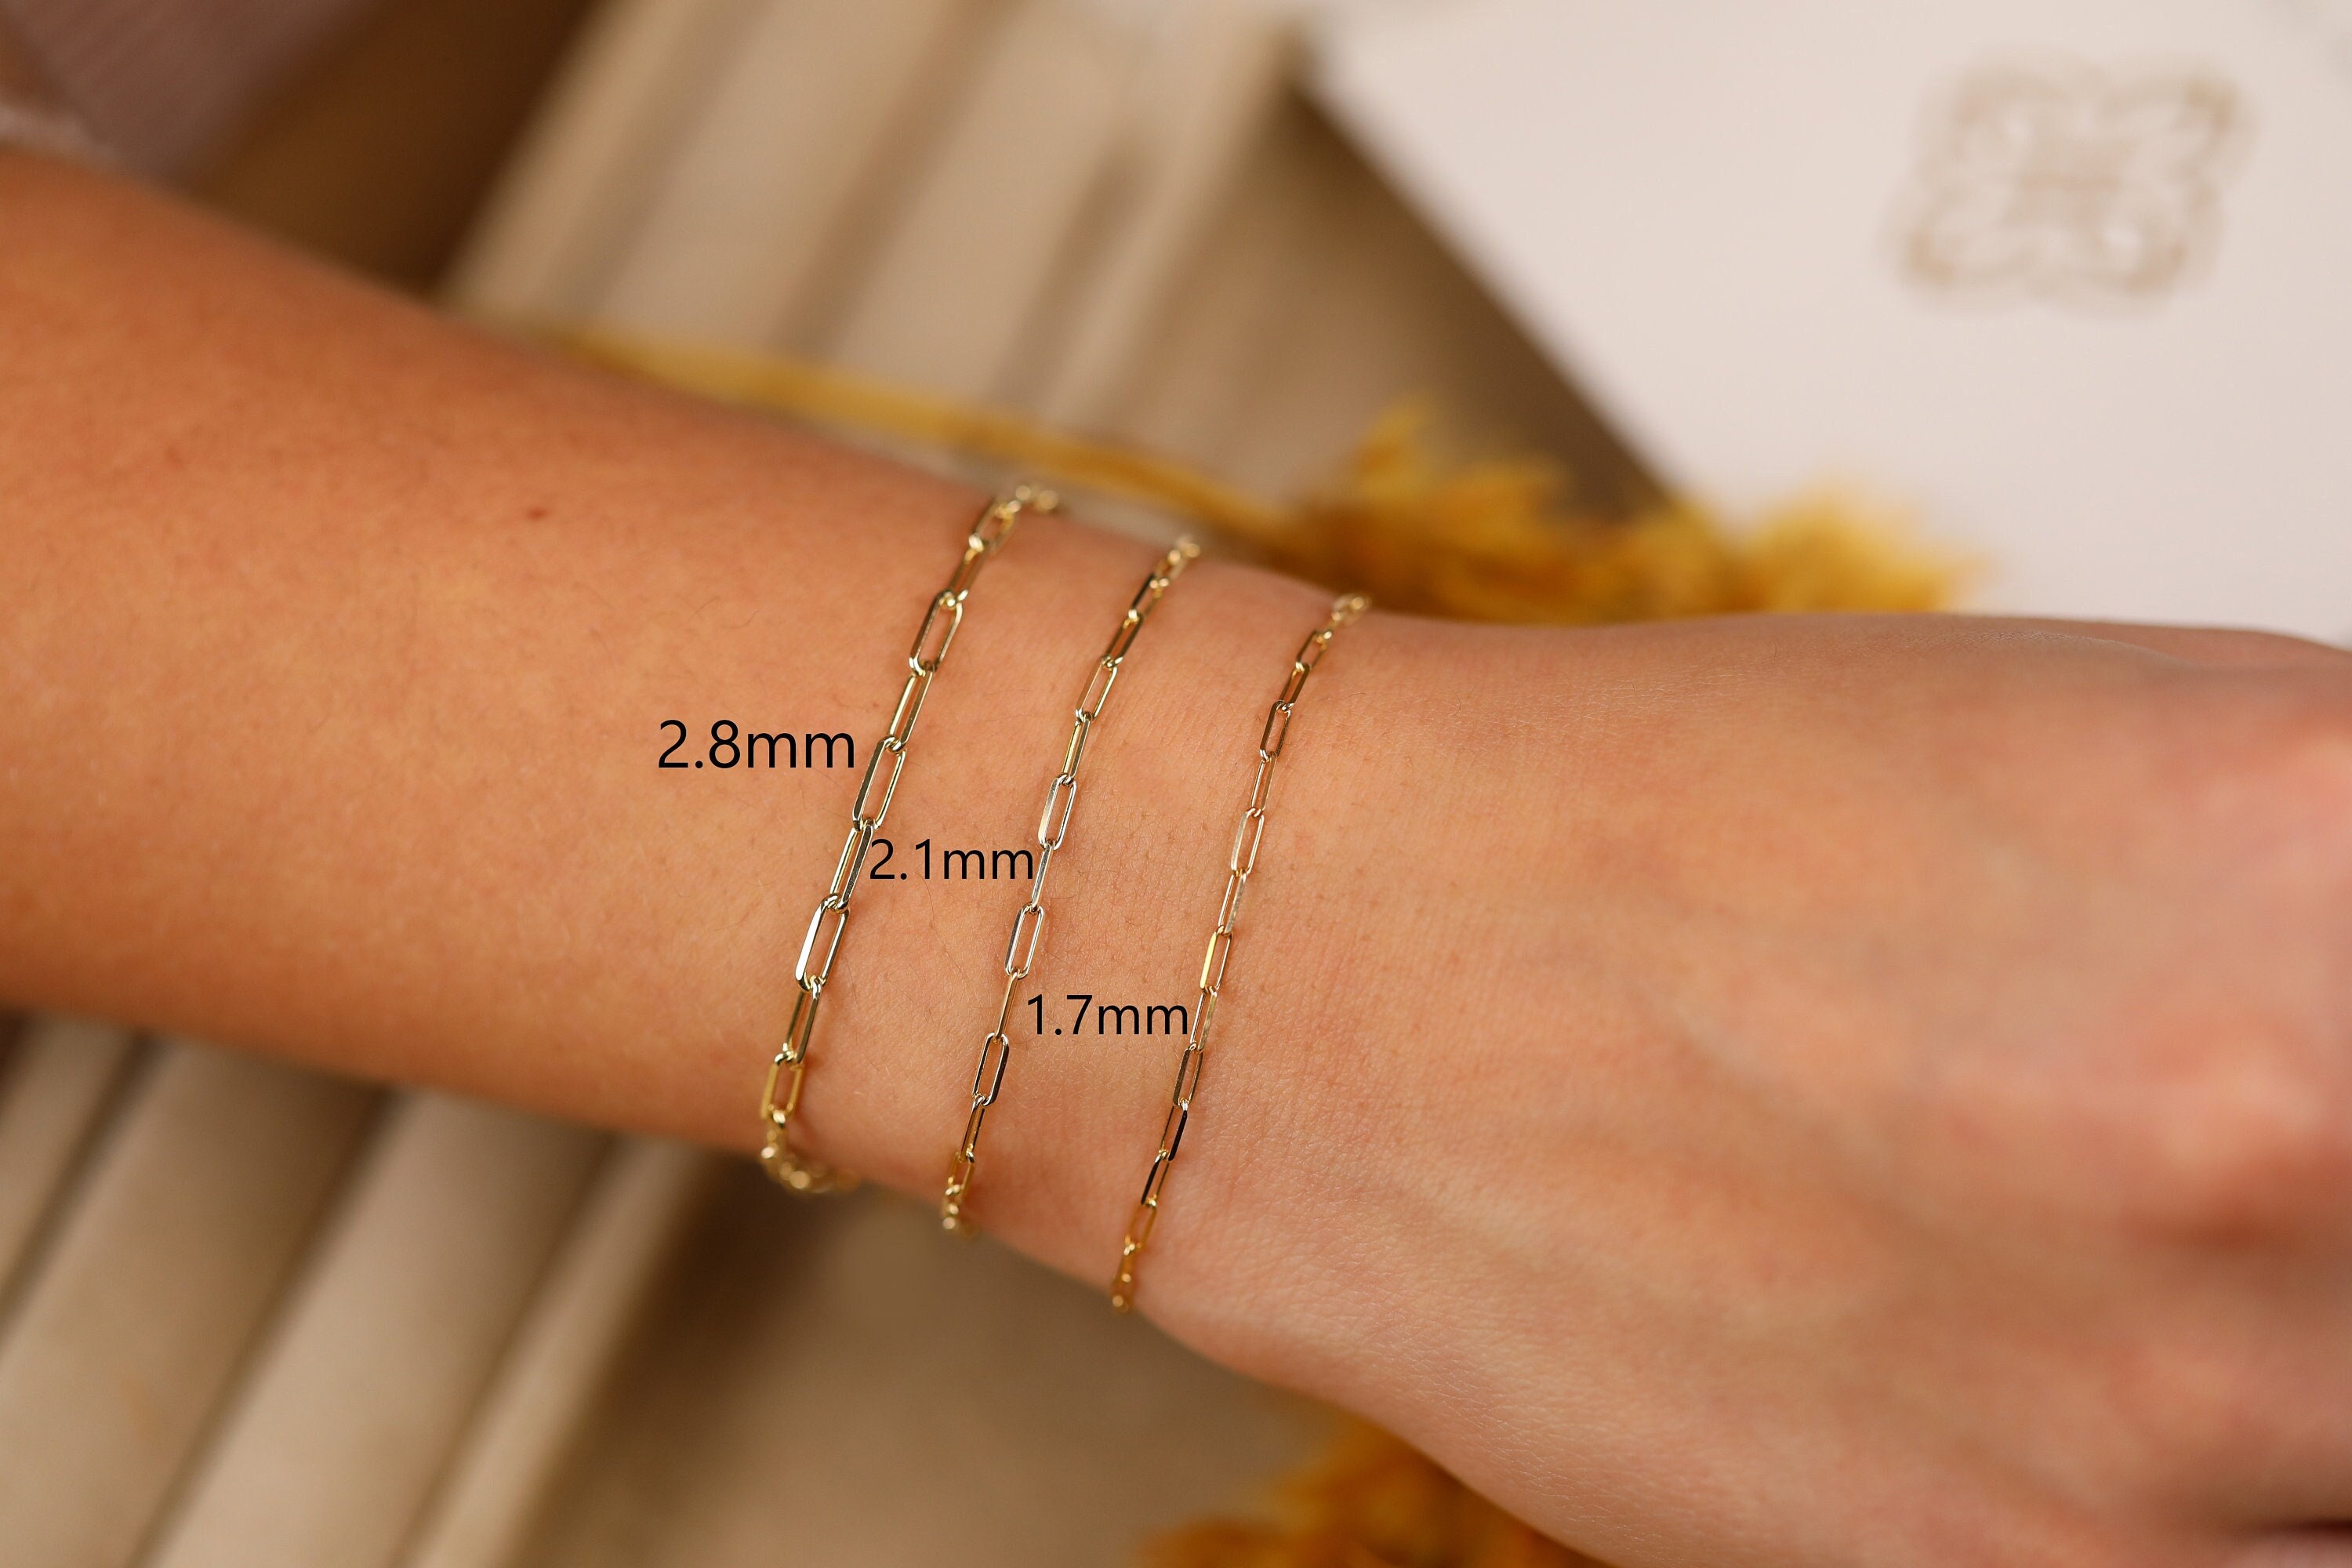 Gold Paperclip Charm Bracelet